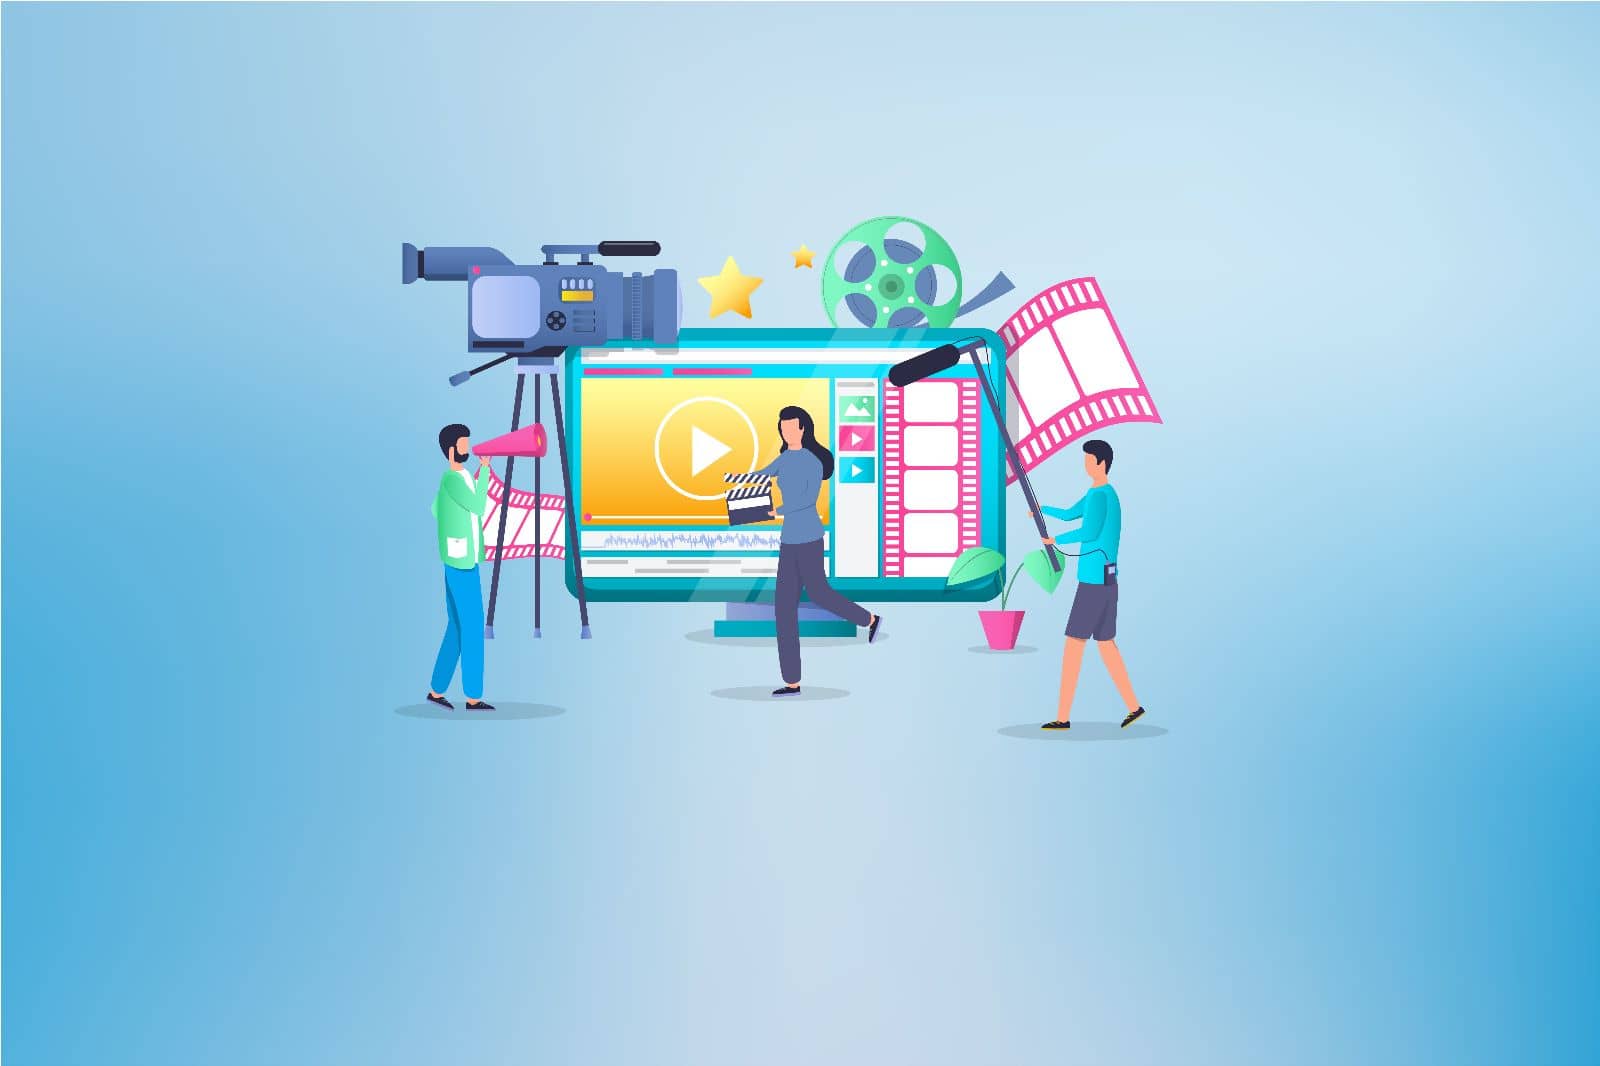 Benefits of Video Advertising